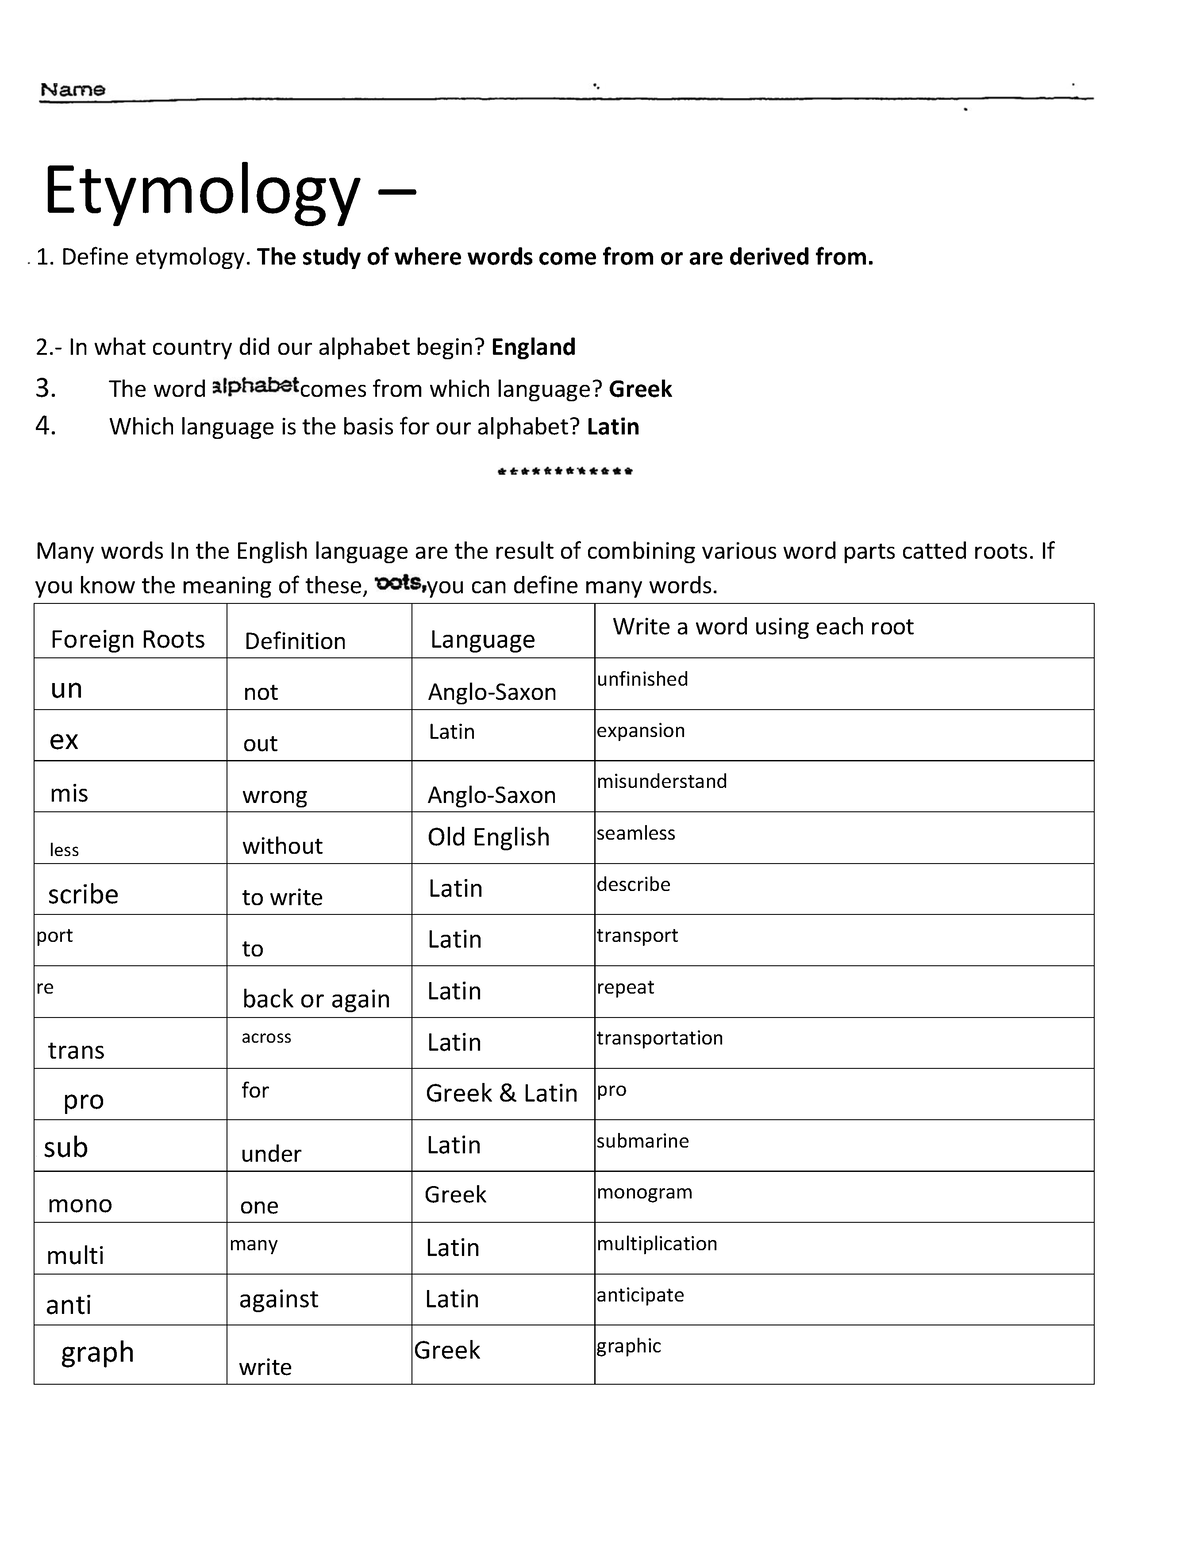 word etymology assignment